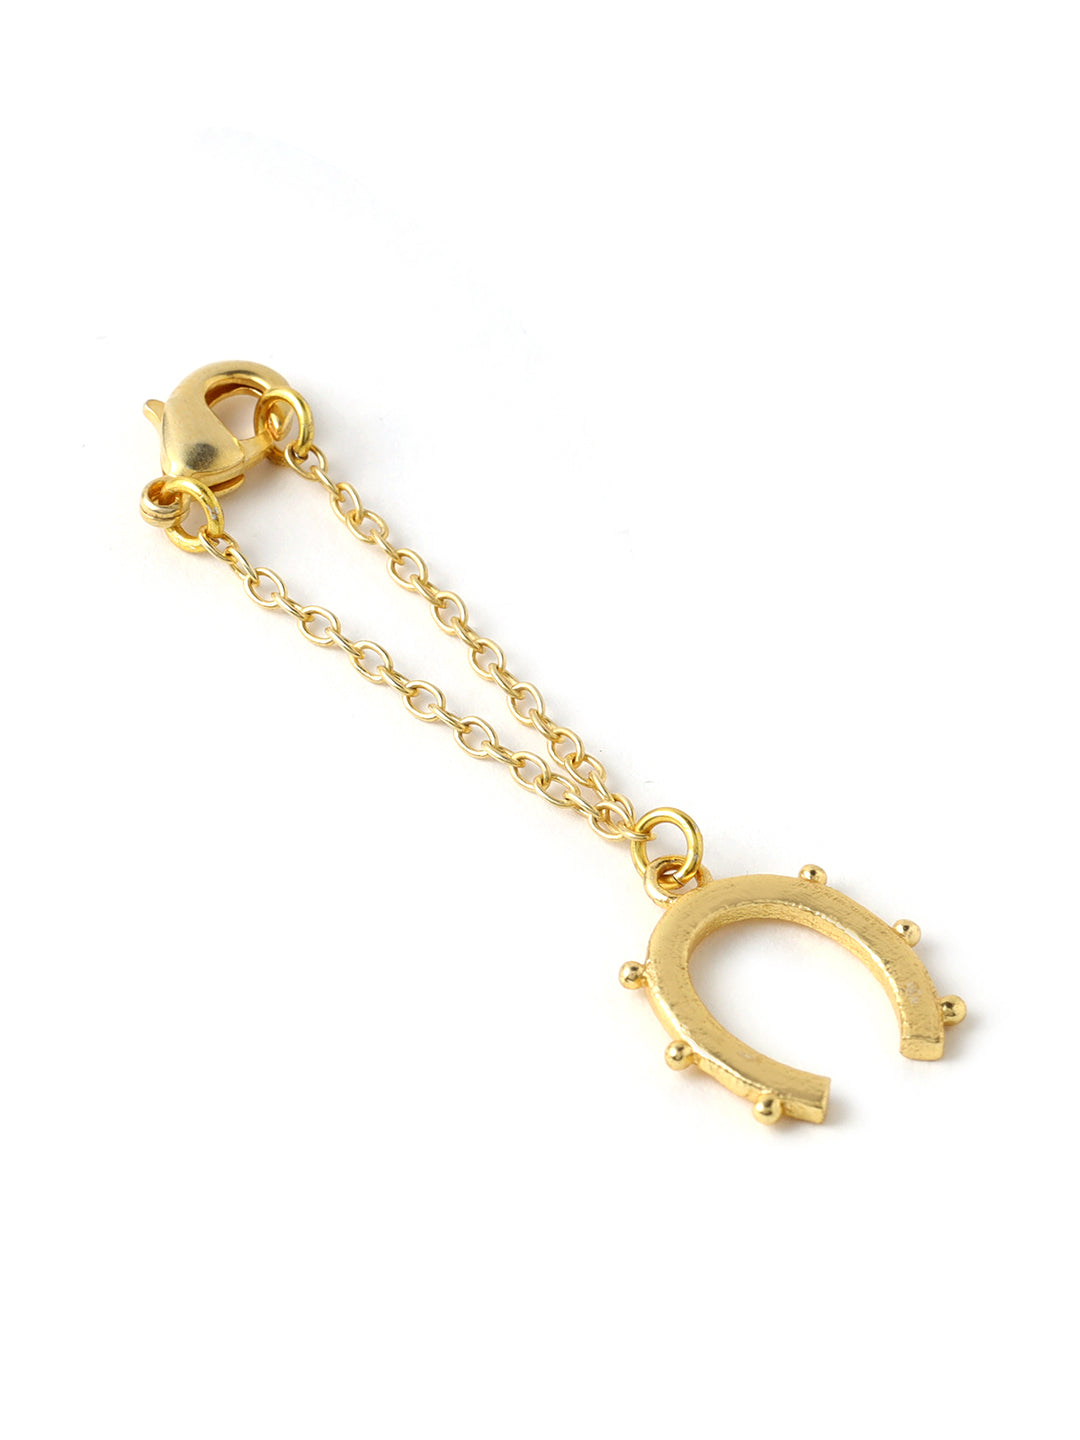 Horseshoe Watch Chain Charm - Golden